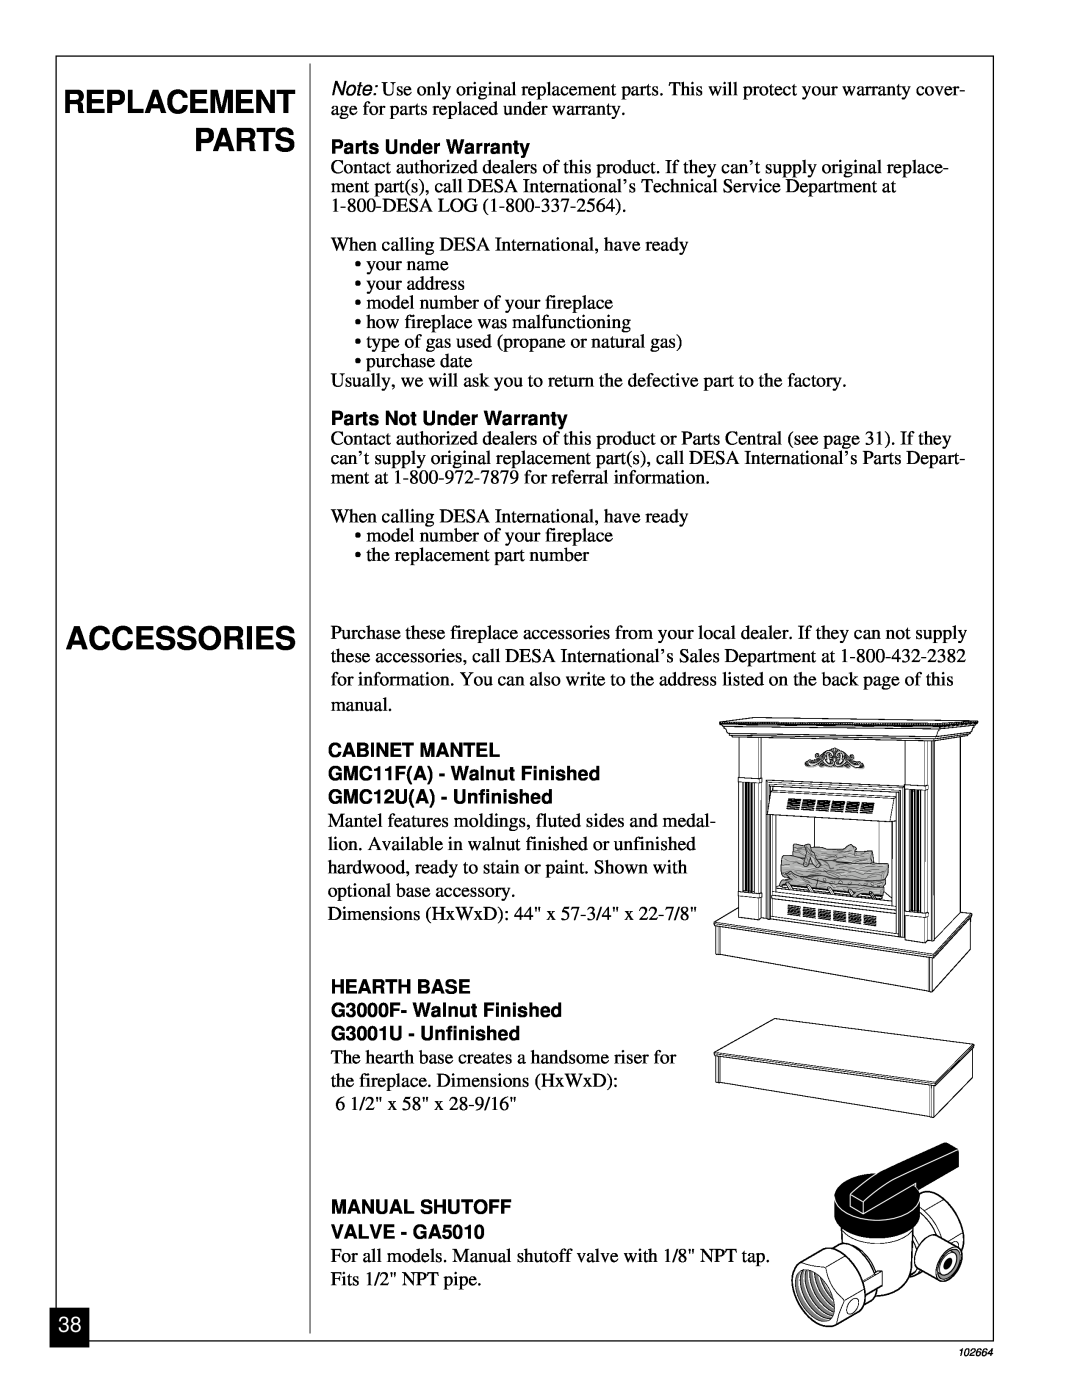 Desa Tech CGF265NVA Accessories, Replacement Parts, Parts Under Warranty, Parts Not Under Warranty, GMC12UA - Unfinished 